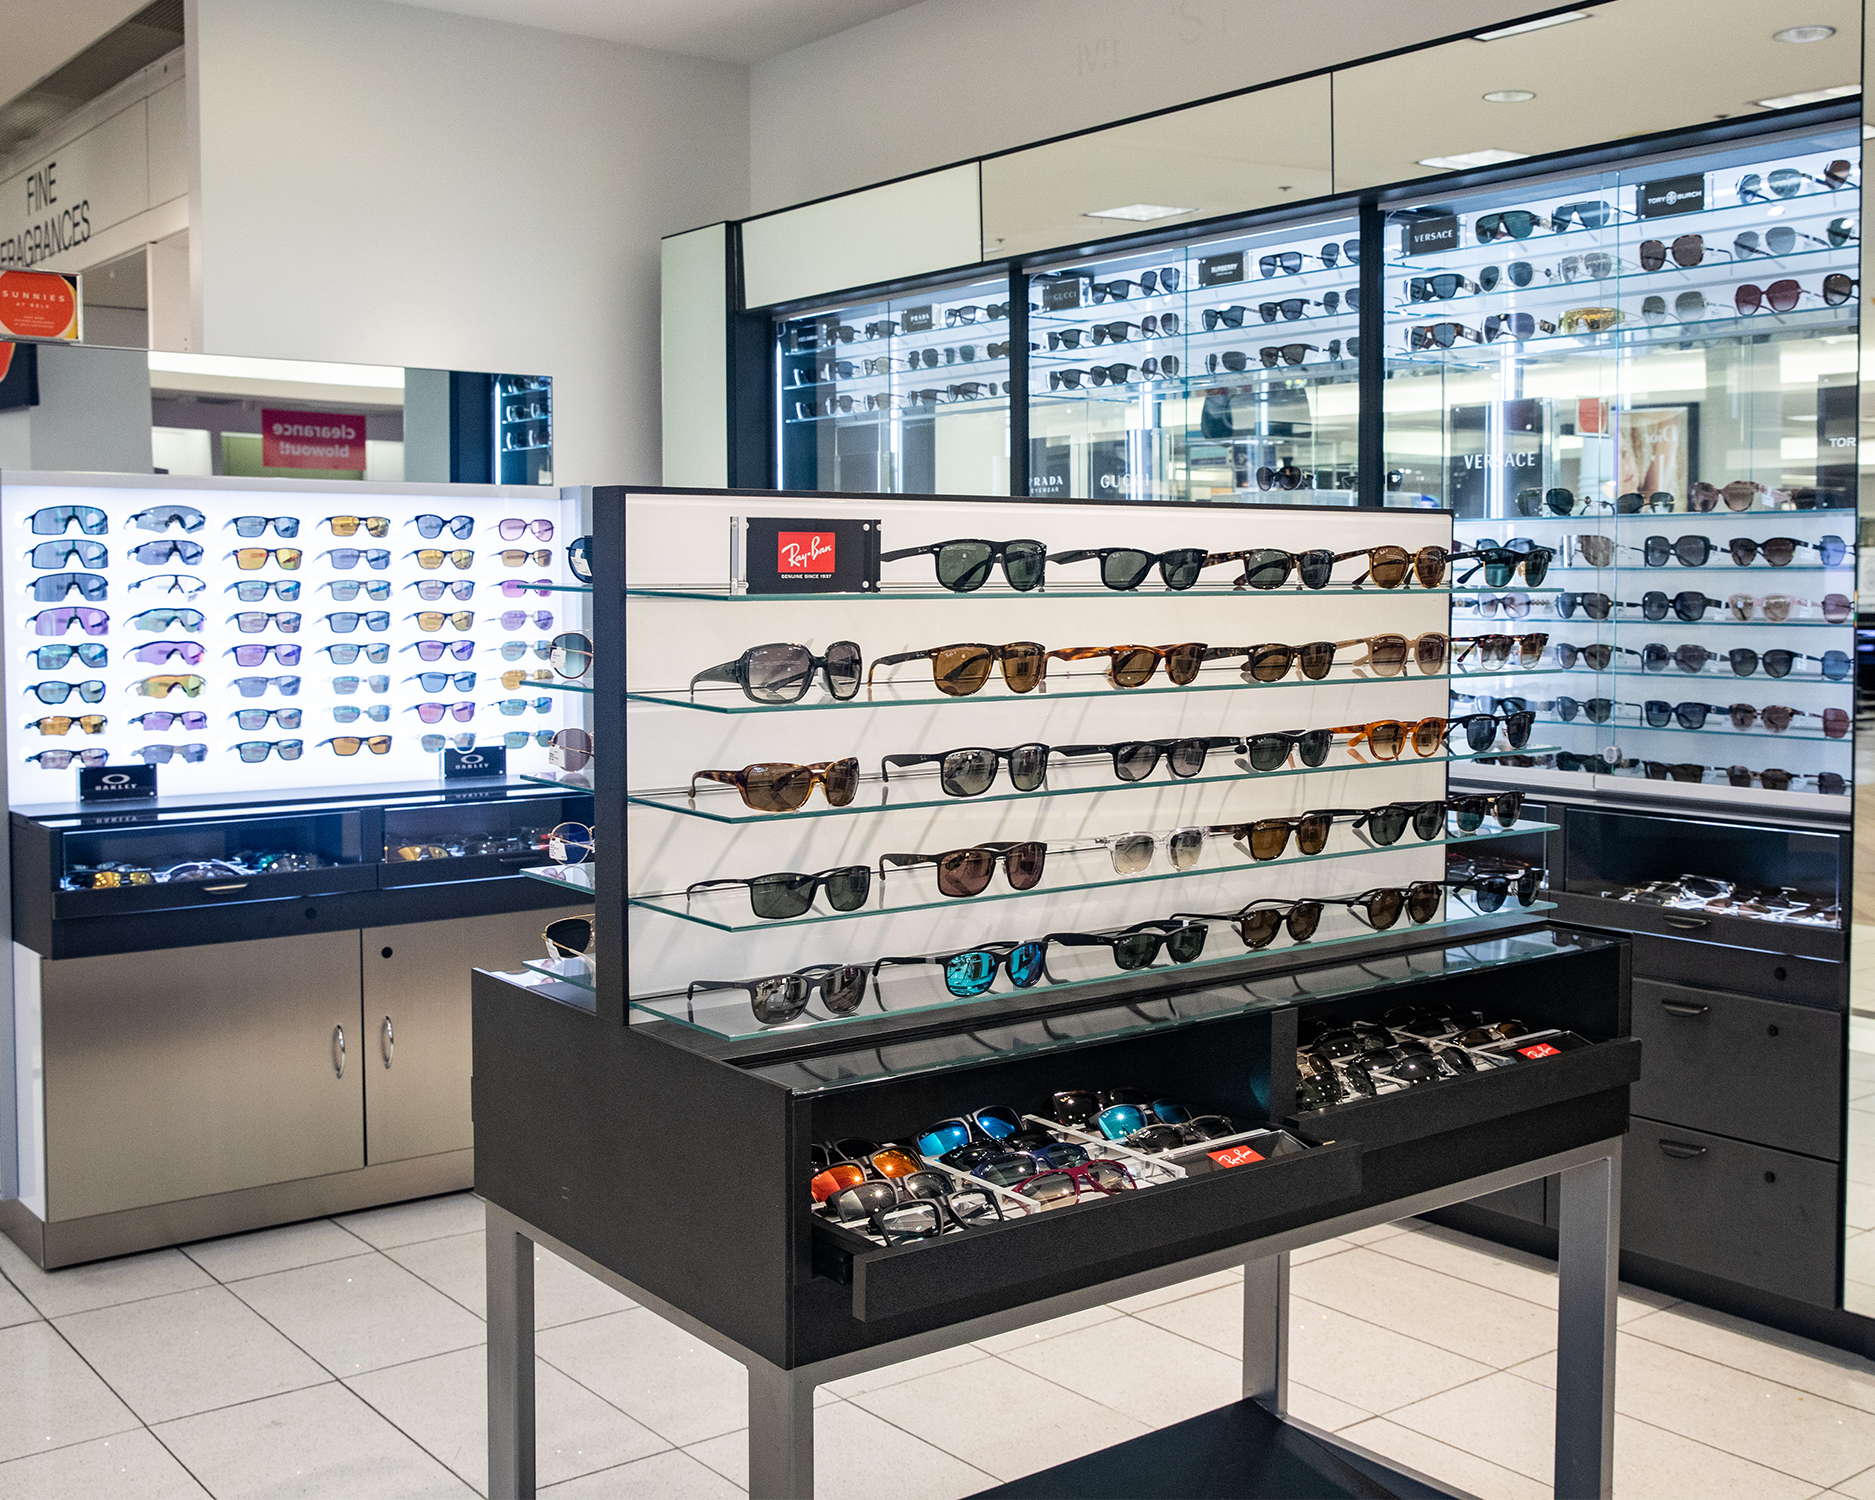 Belk Store Design - Sunglasses Gondola Displays